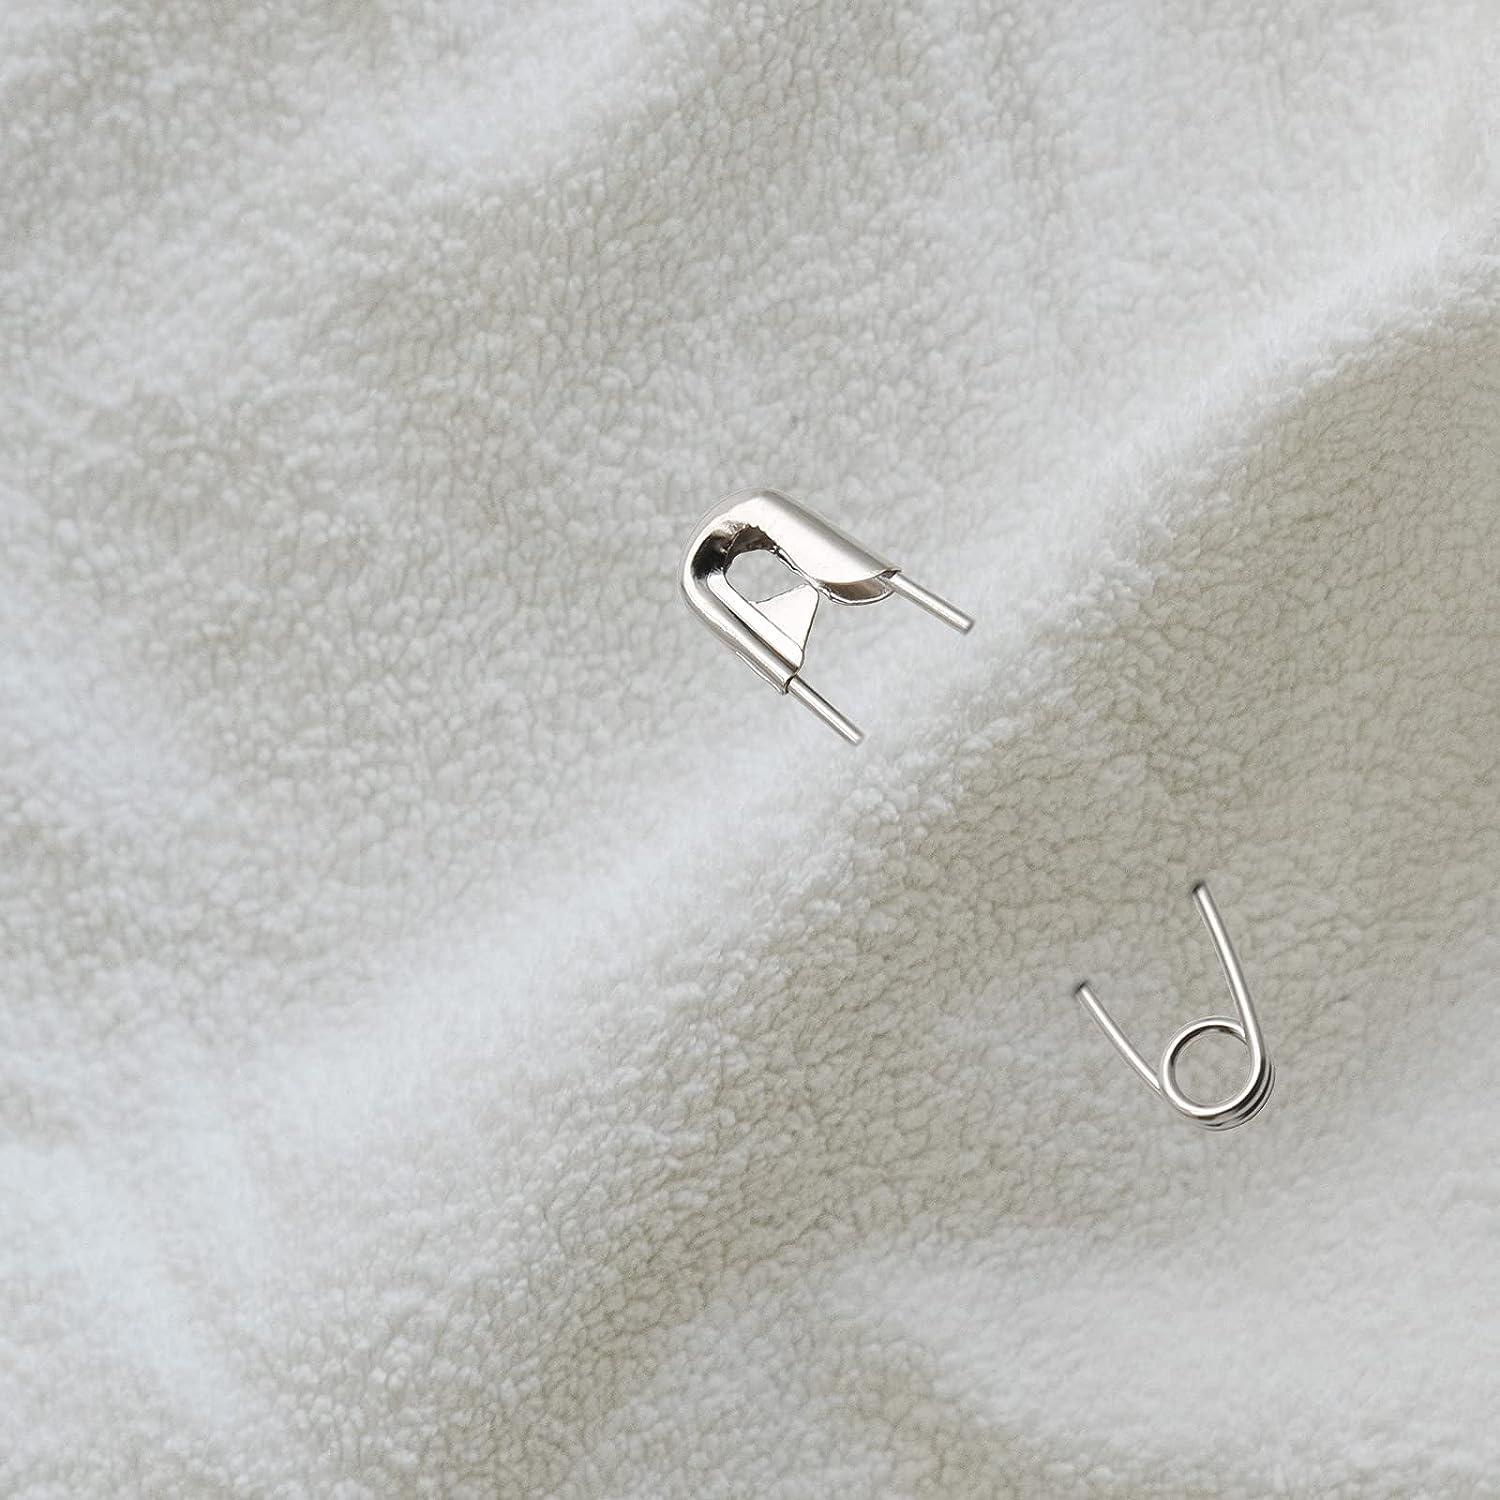 Qjaiune 100Pcs Curved Safety Pins Size 3, 2 / 50mm Quilting Basting Pins,  Bent Safety Pins for Quilting and Knitting (Sliver)